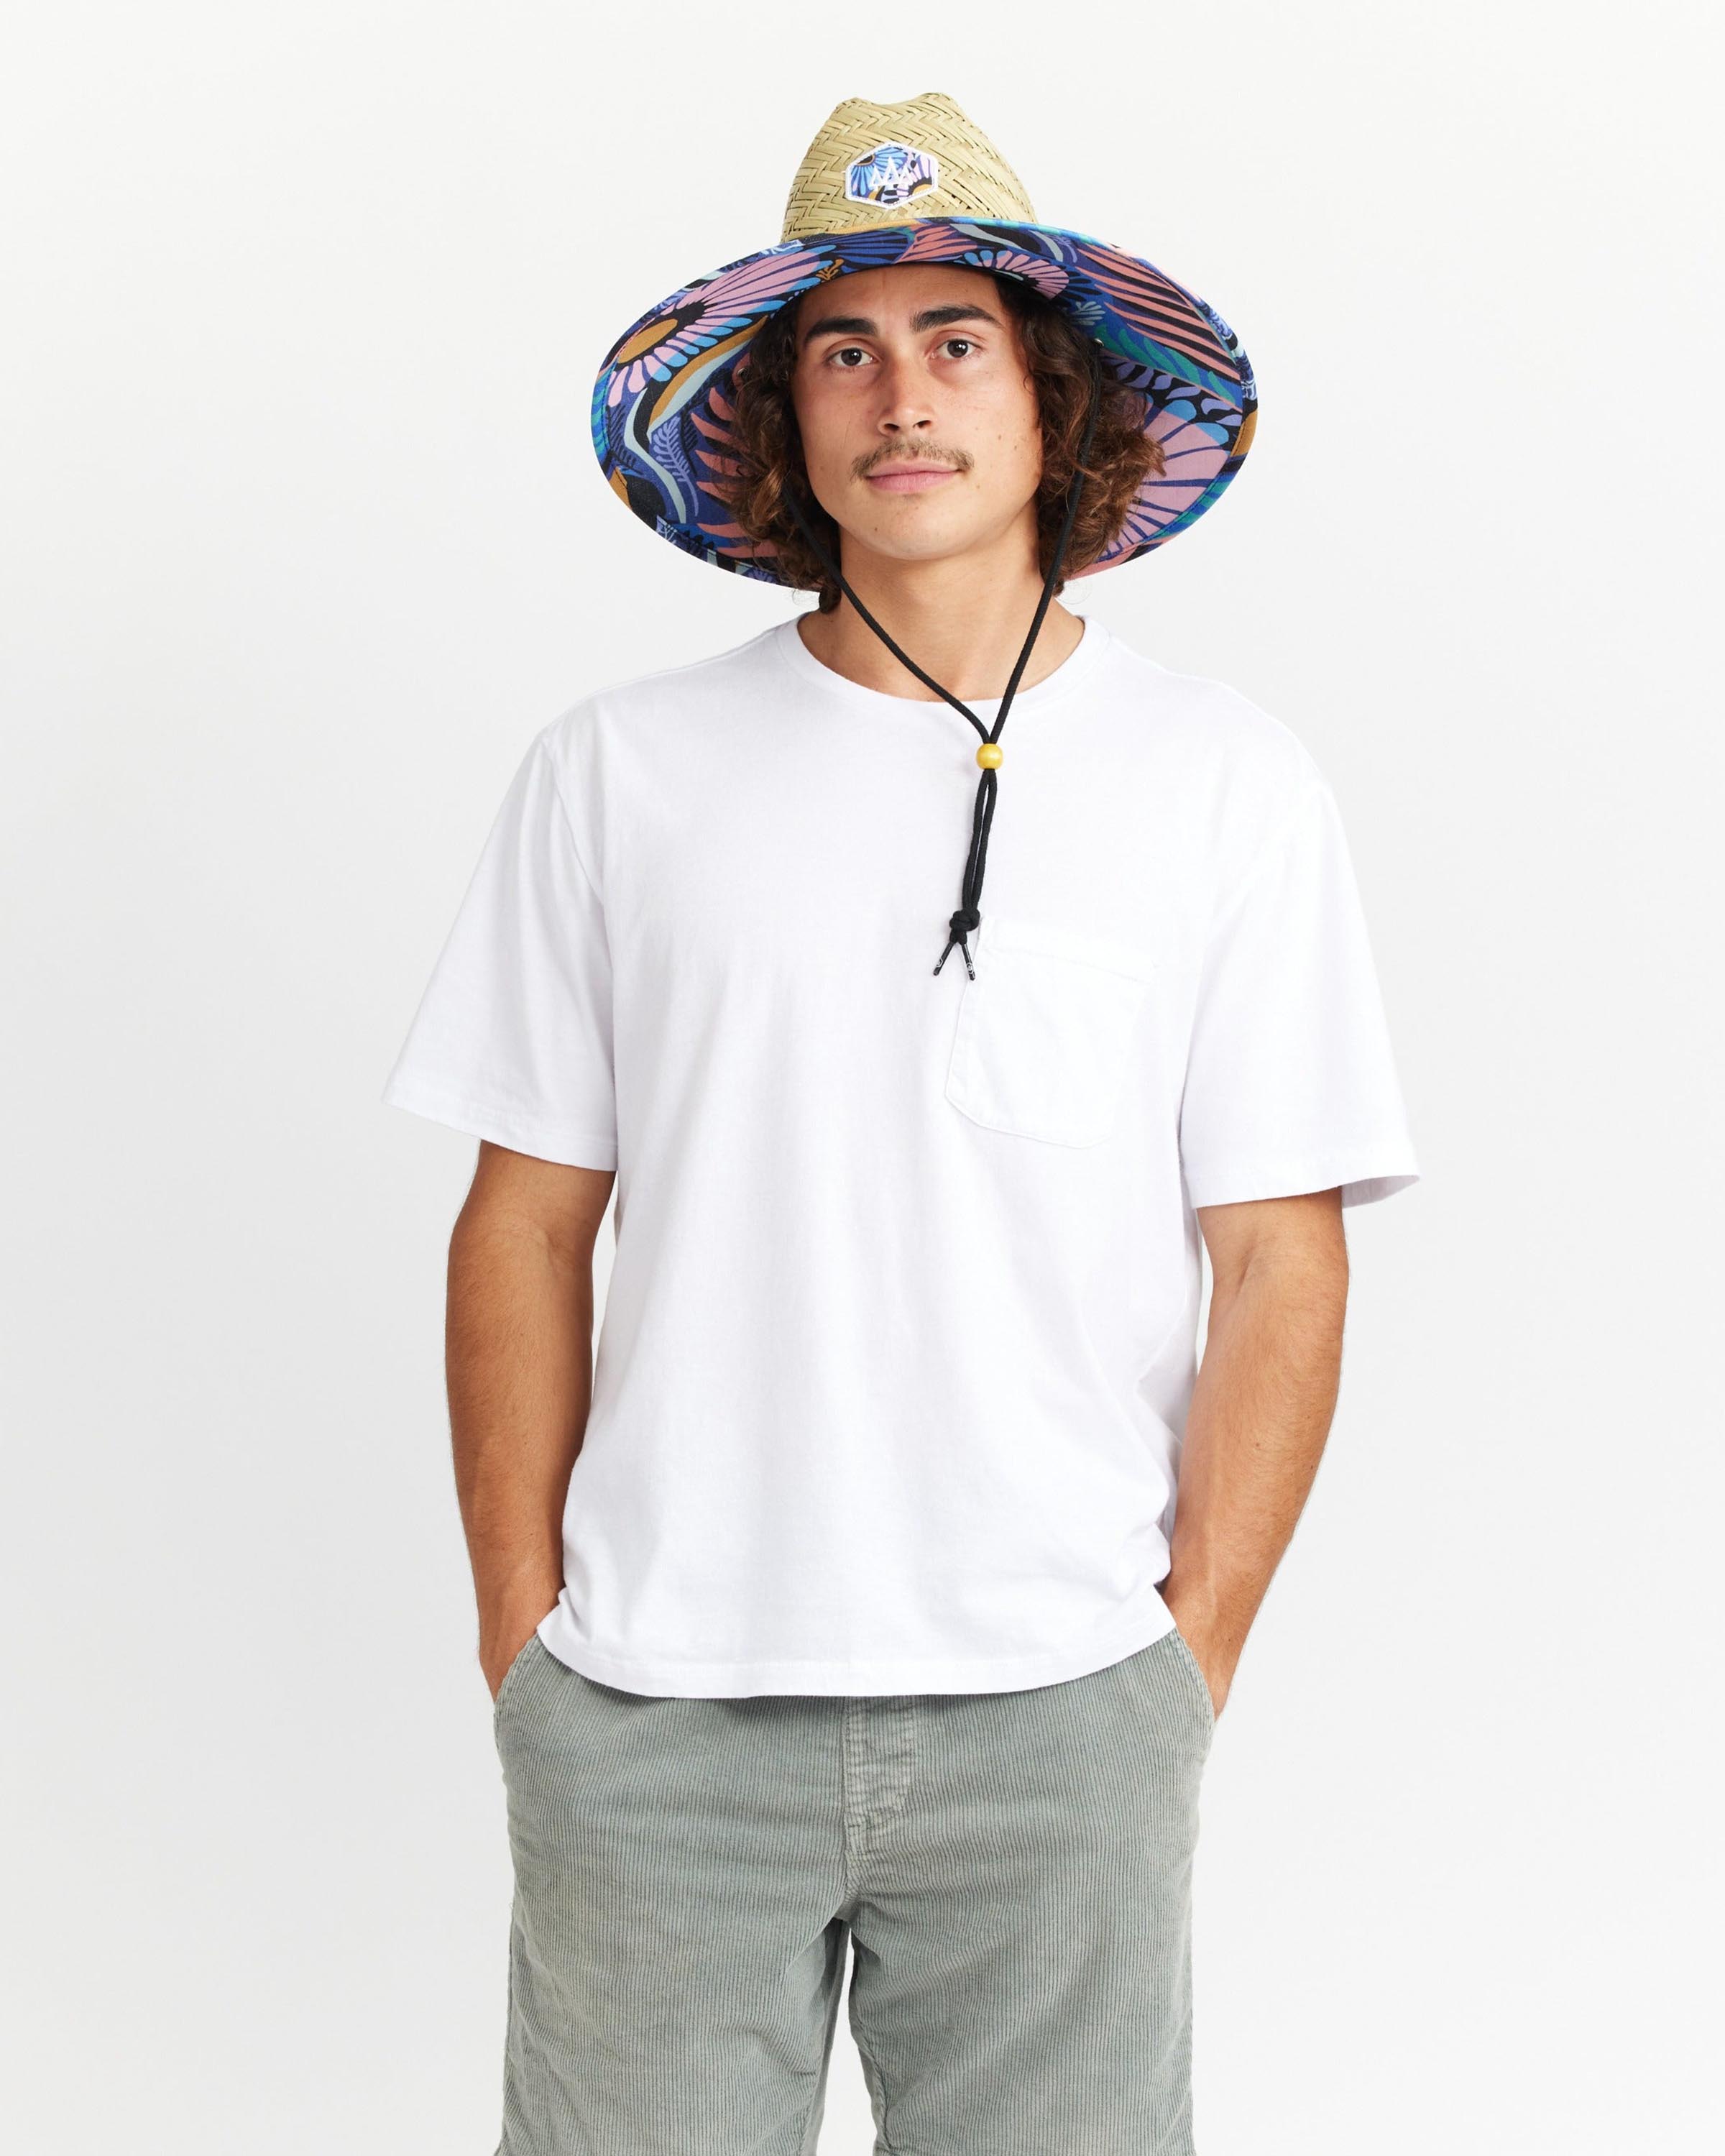 Hemlock male model looking straight wearing Eden straw lifeguard hat with purple floral pattern